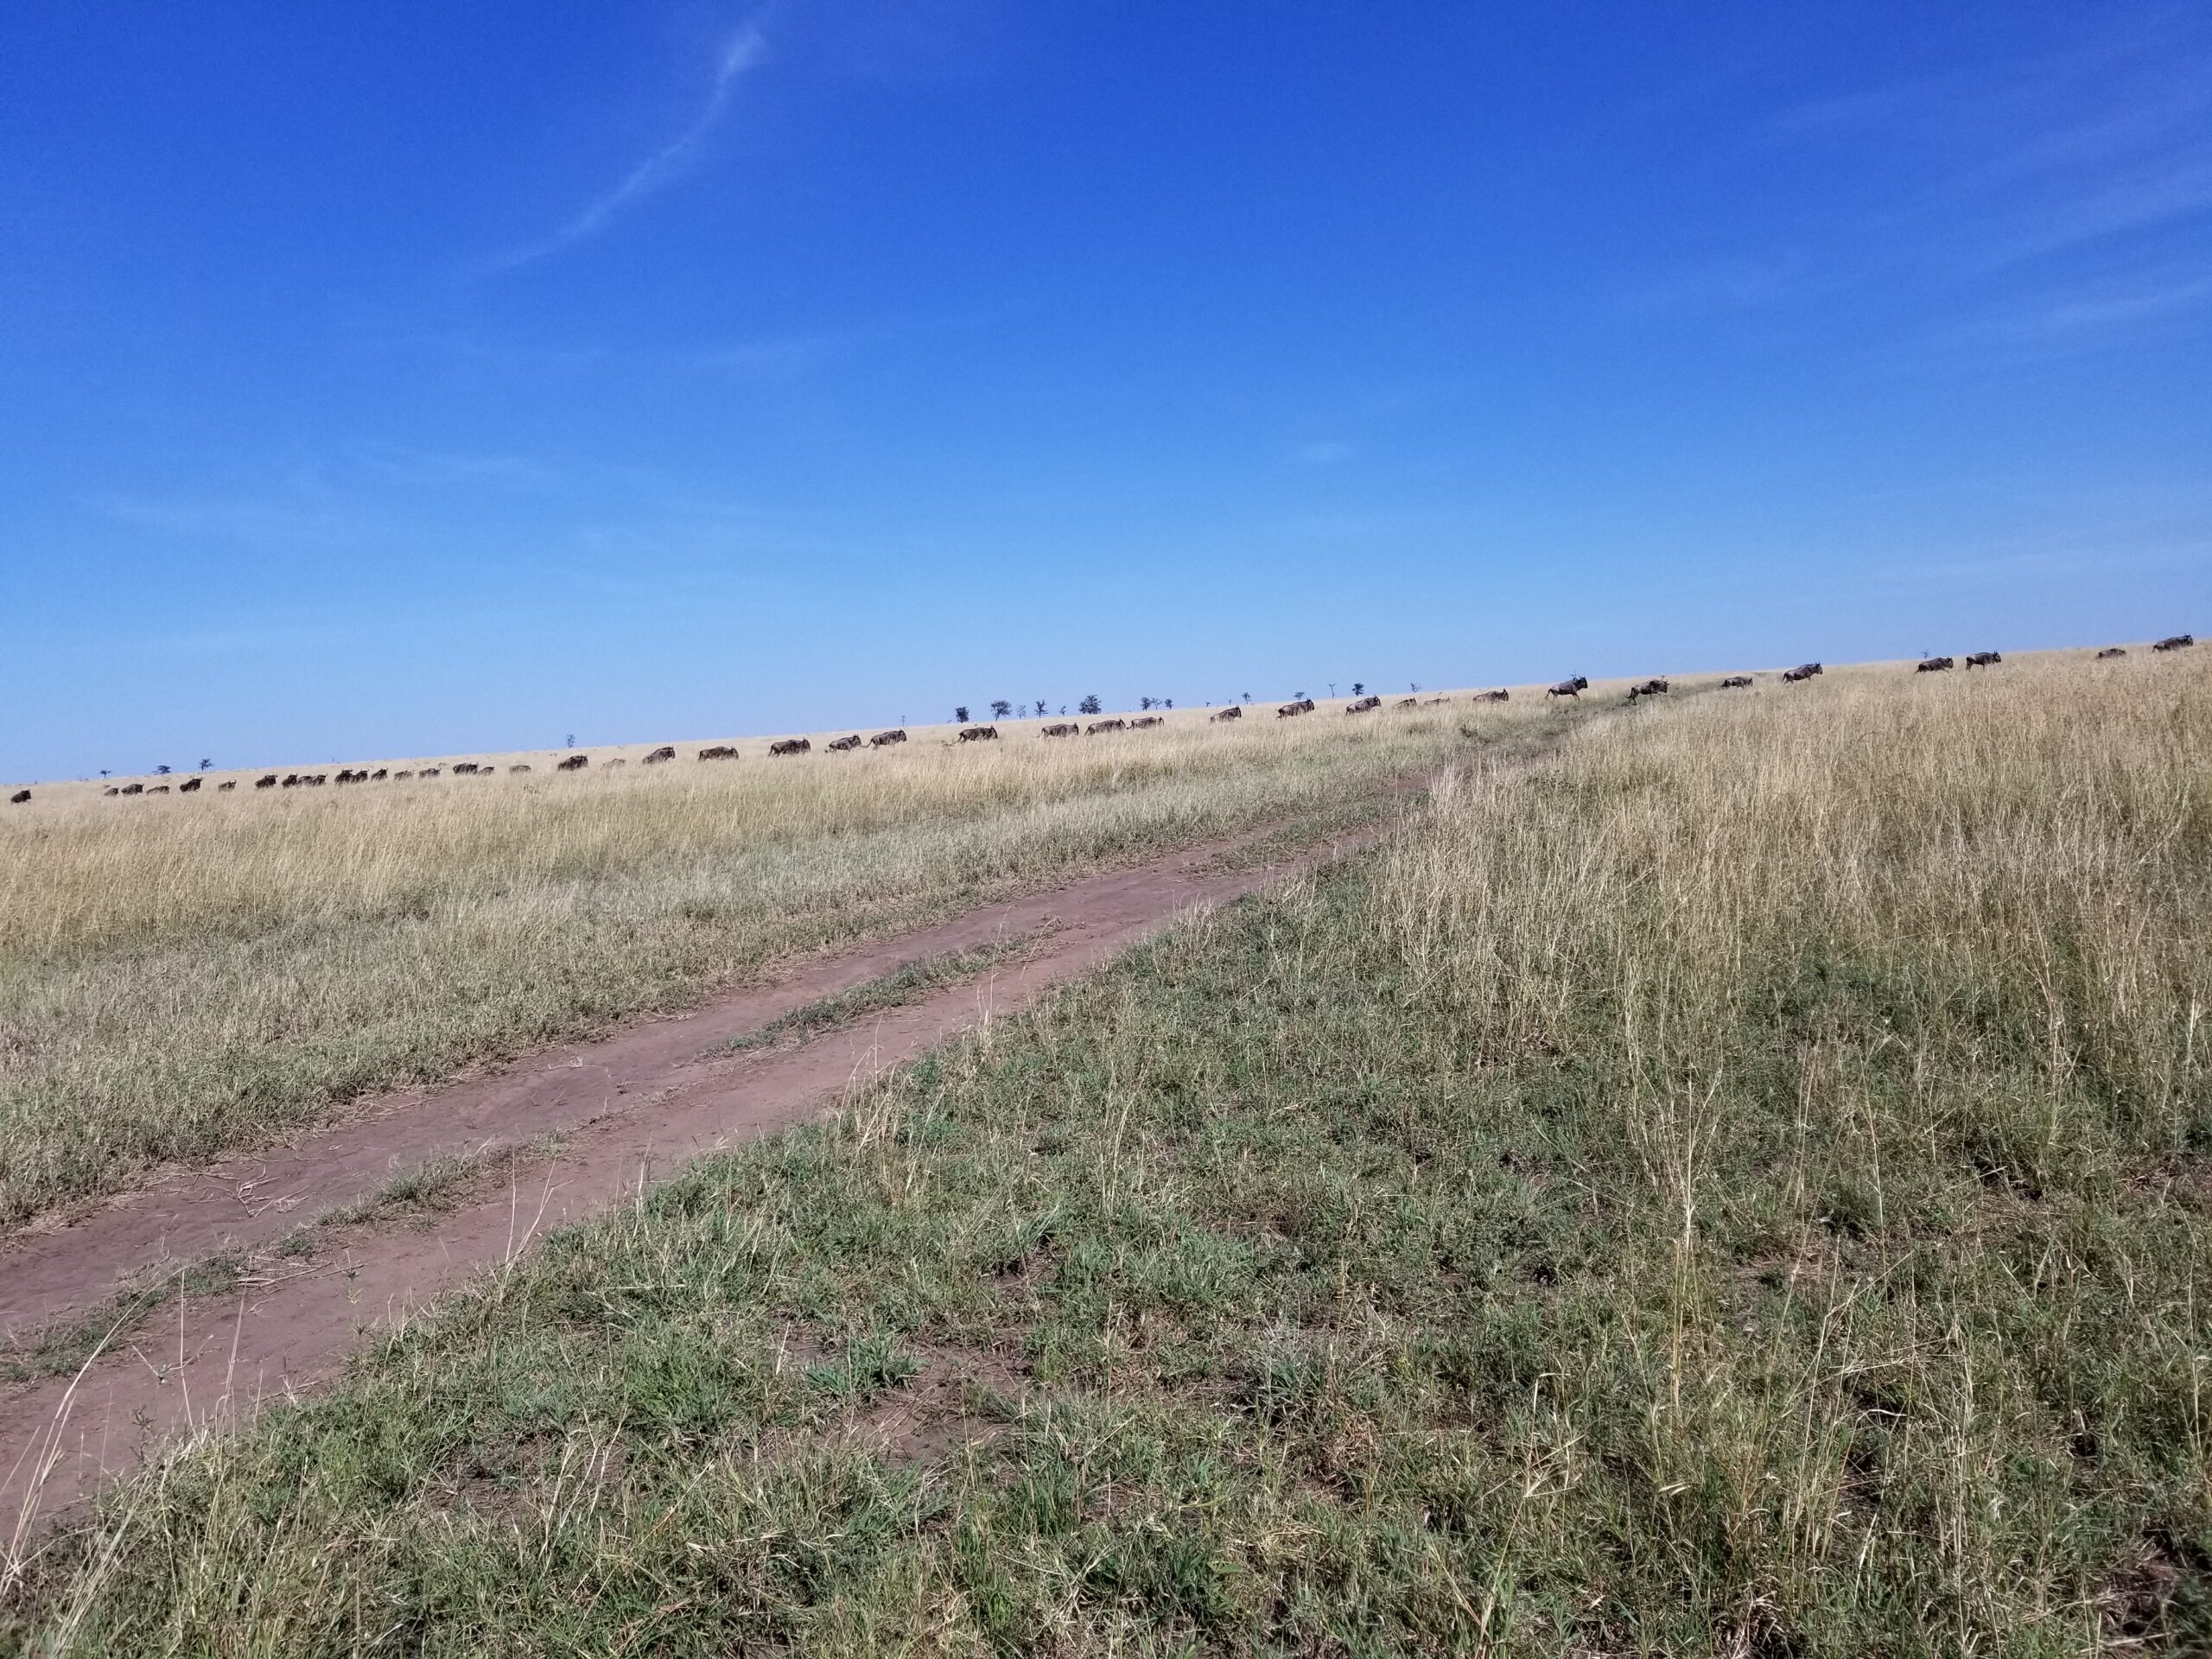 Wildebeest Migration on the Serengeti